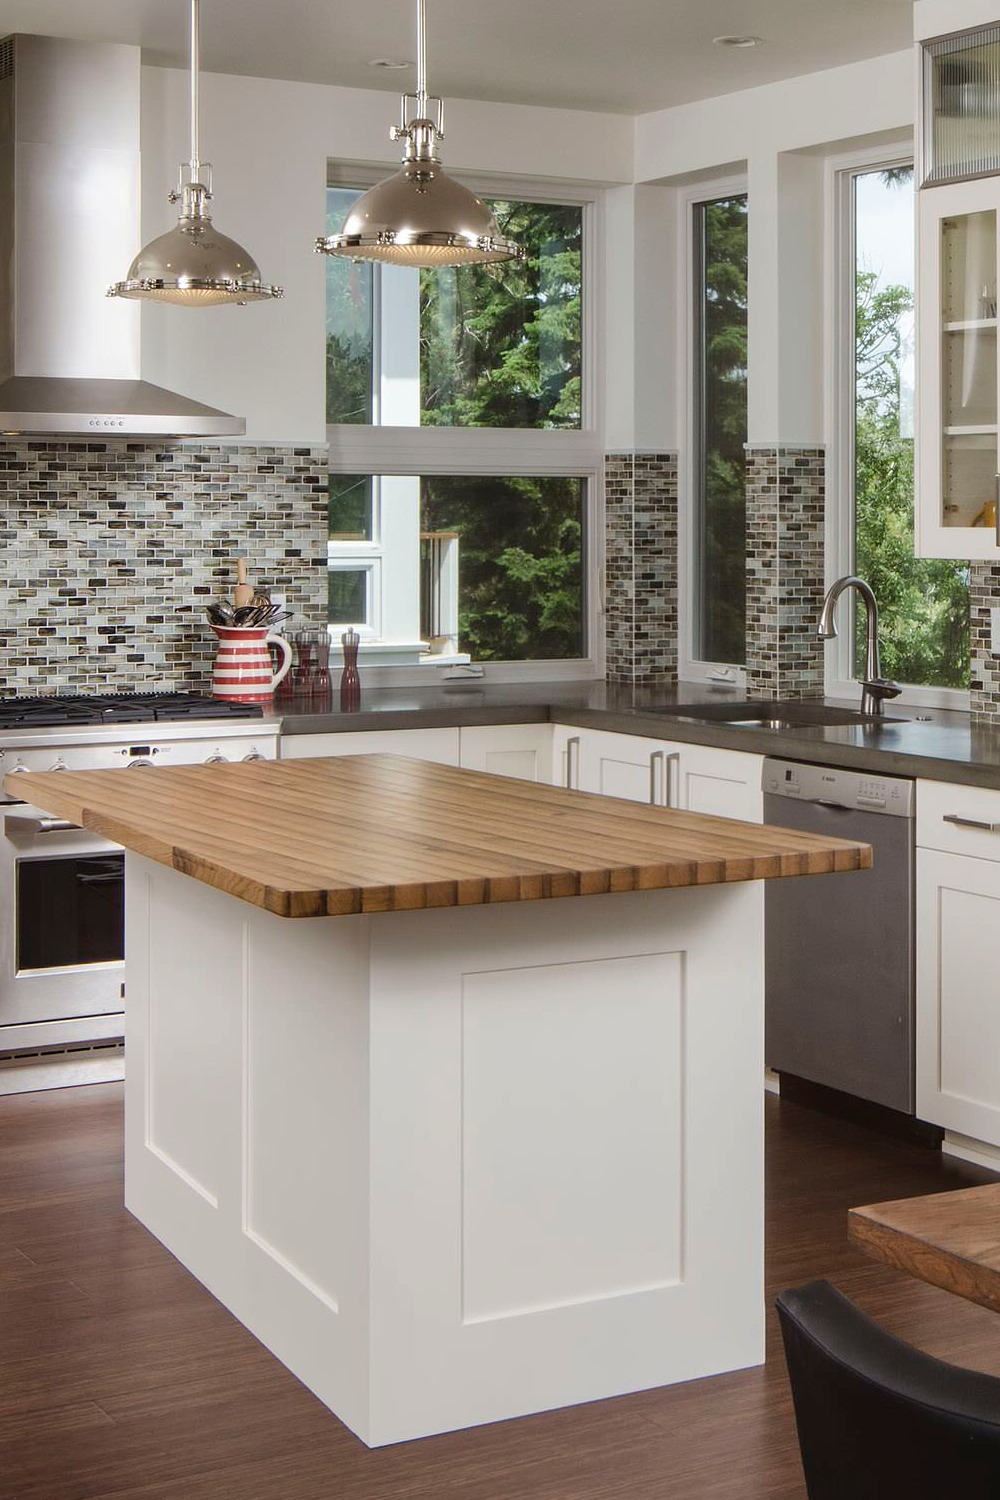 Multicolored Mosaic Tile Backsplash Warmth Wood Floor White Cabinet Butcher Block Counters